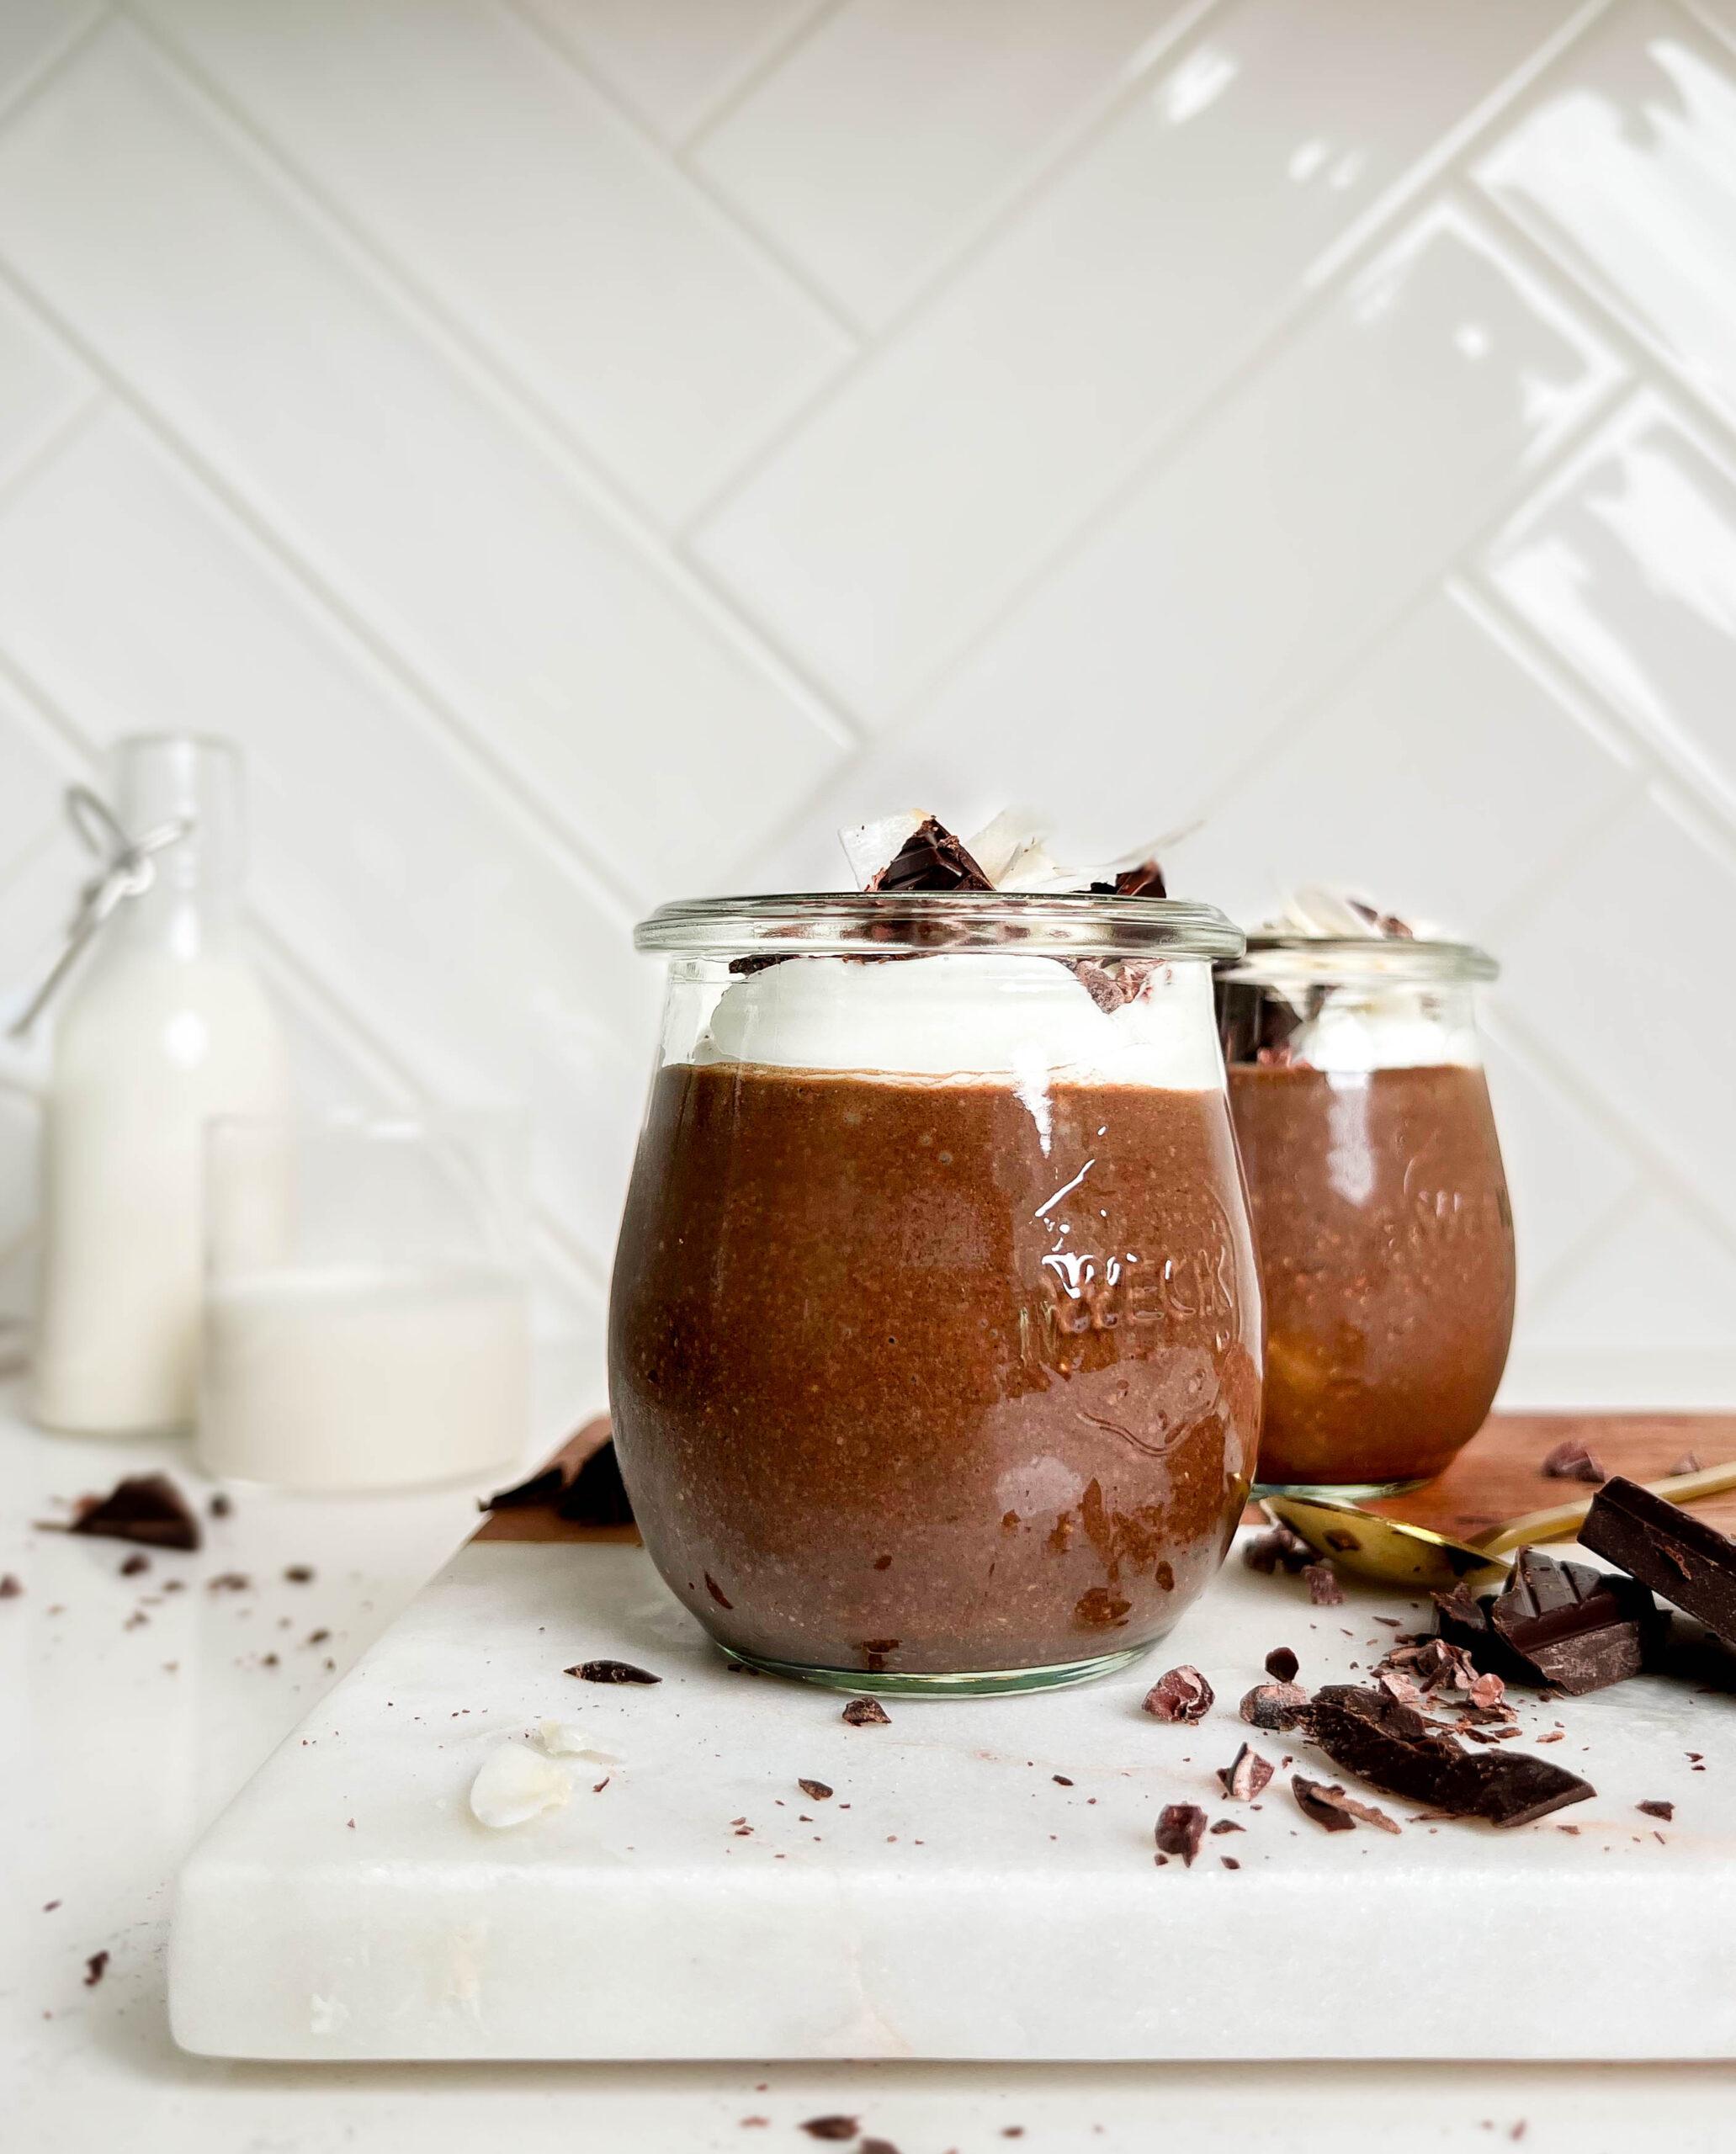 Creamy Chocolate Chia Pudding